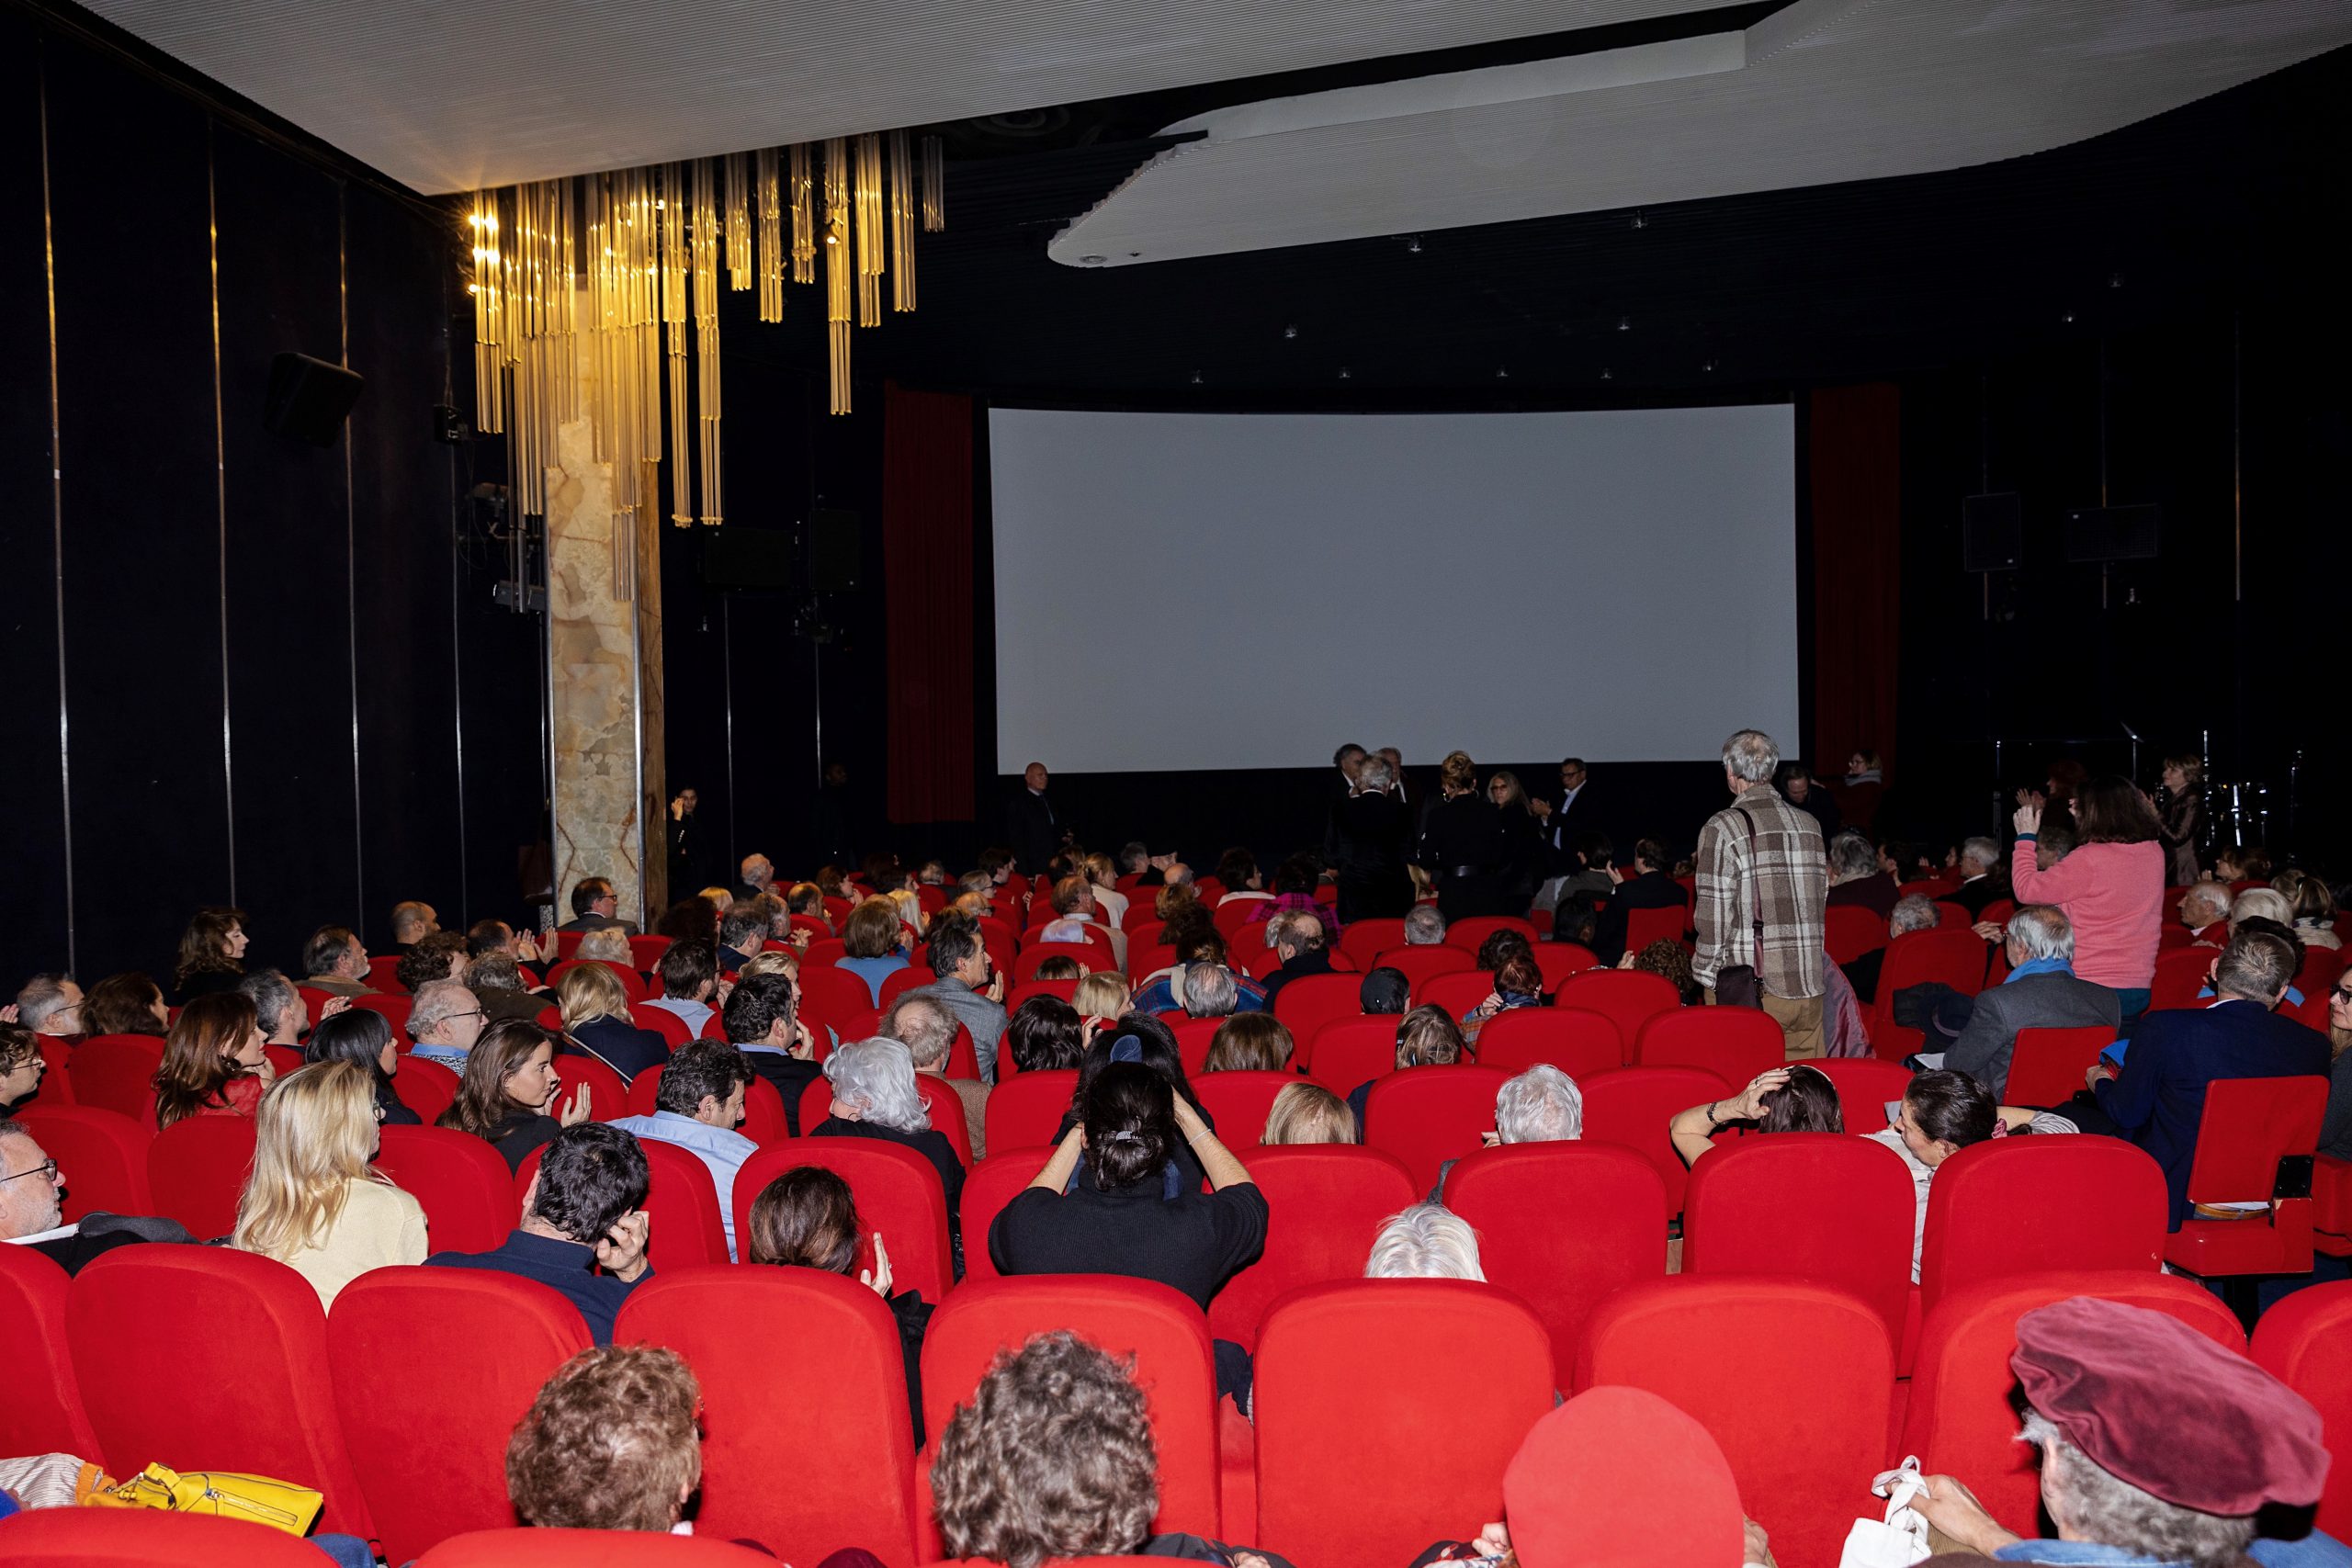 Full house for the premiere of BHL's film "Slava Ukraini" on 6 February 2023 at the Balzac. Photo: Igor Shabalin